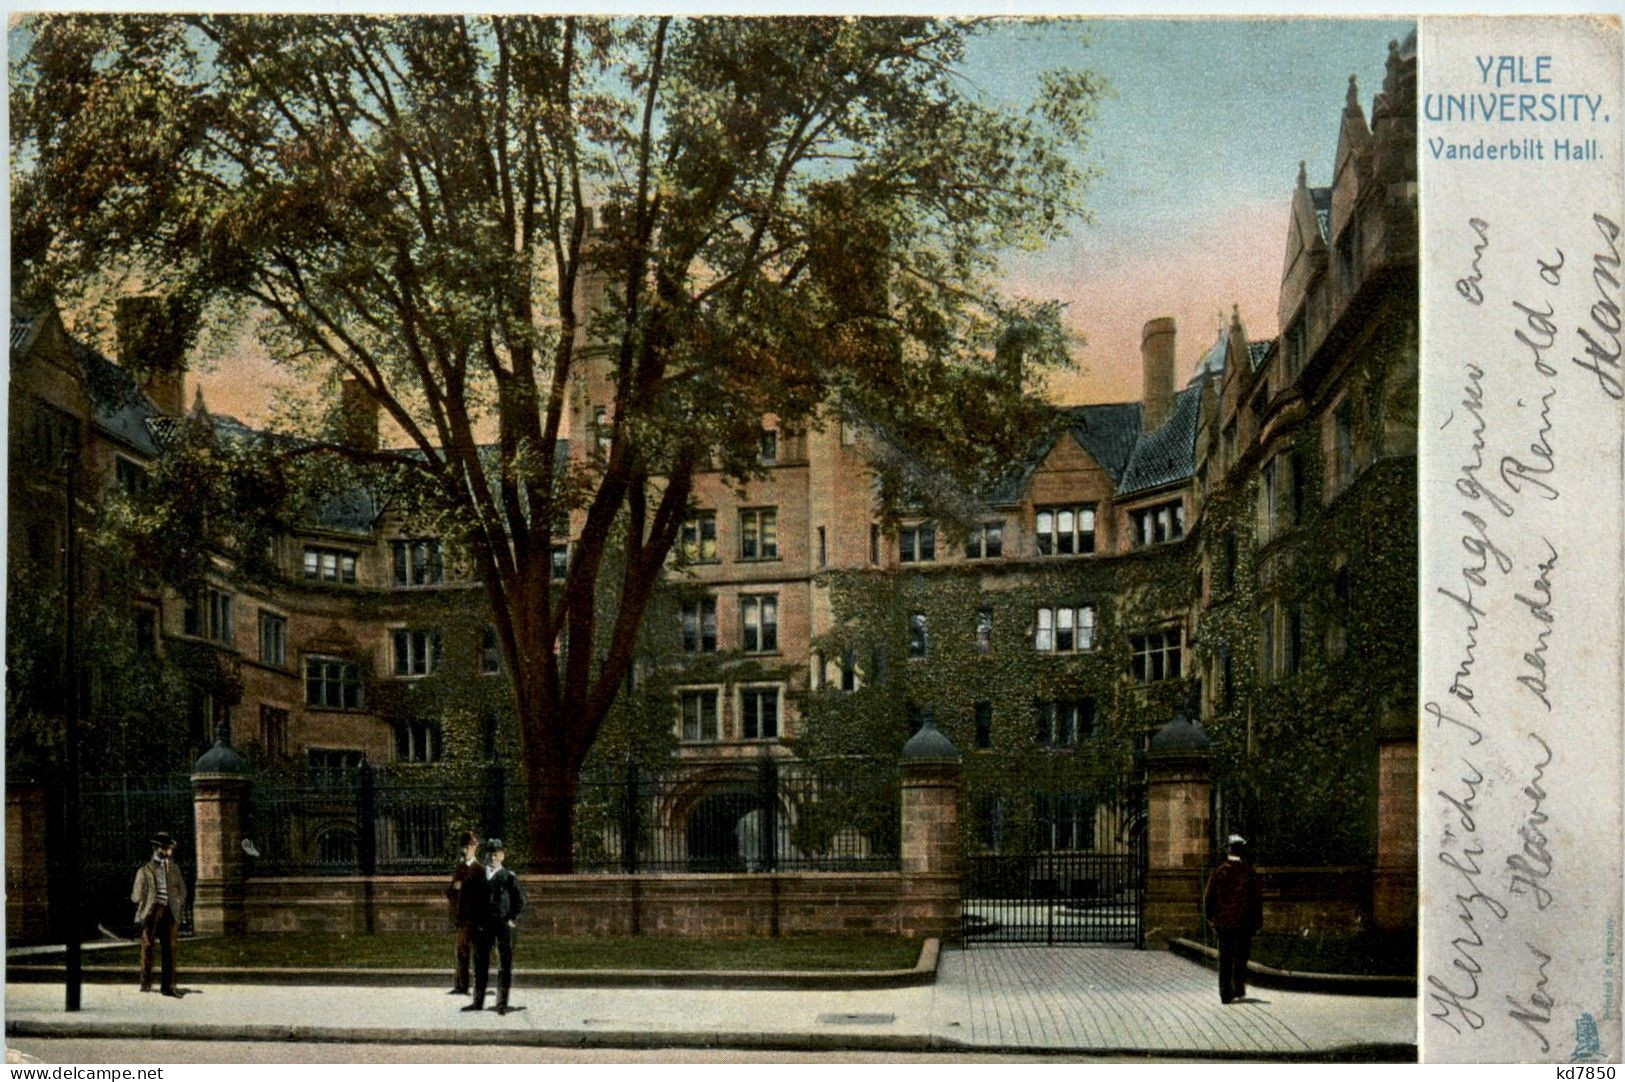 Yale University - New Haven